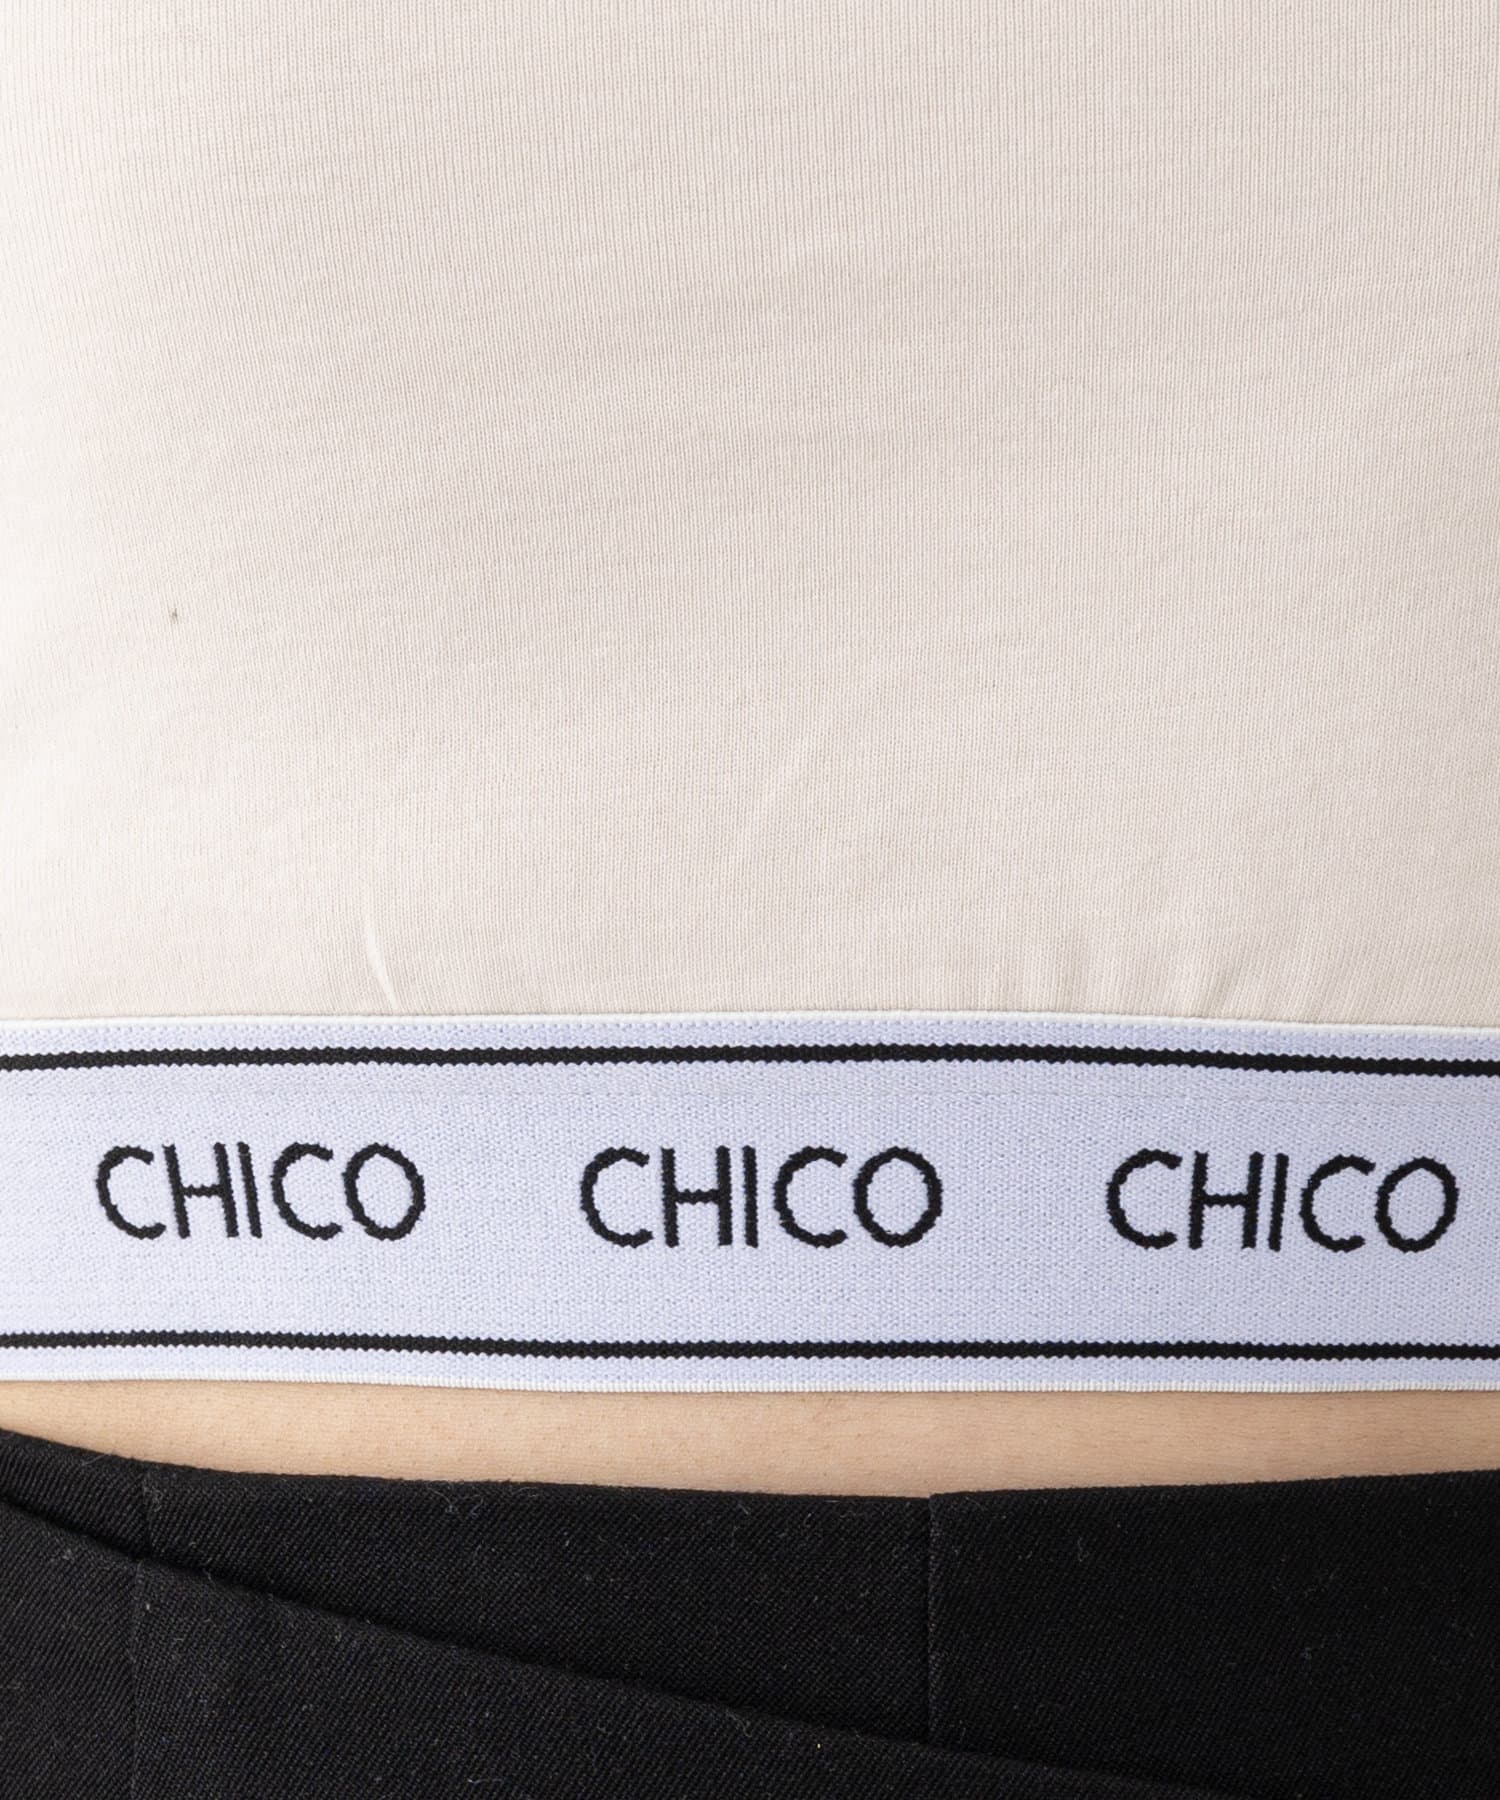 Chico(チコ) 【REVIVAL】パット付き裾ロゴタンク